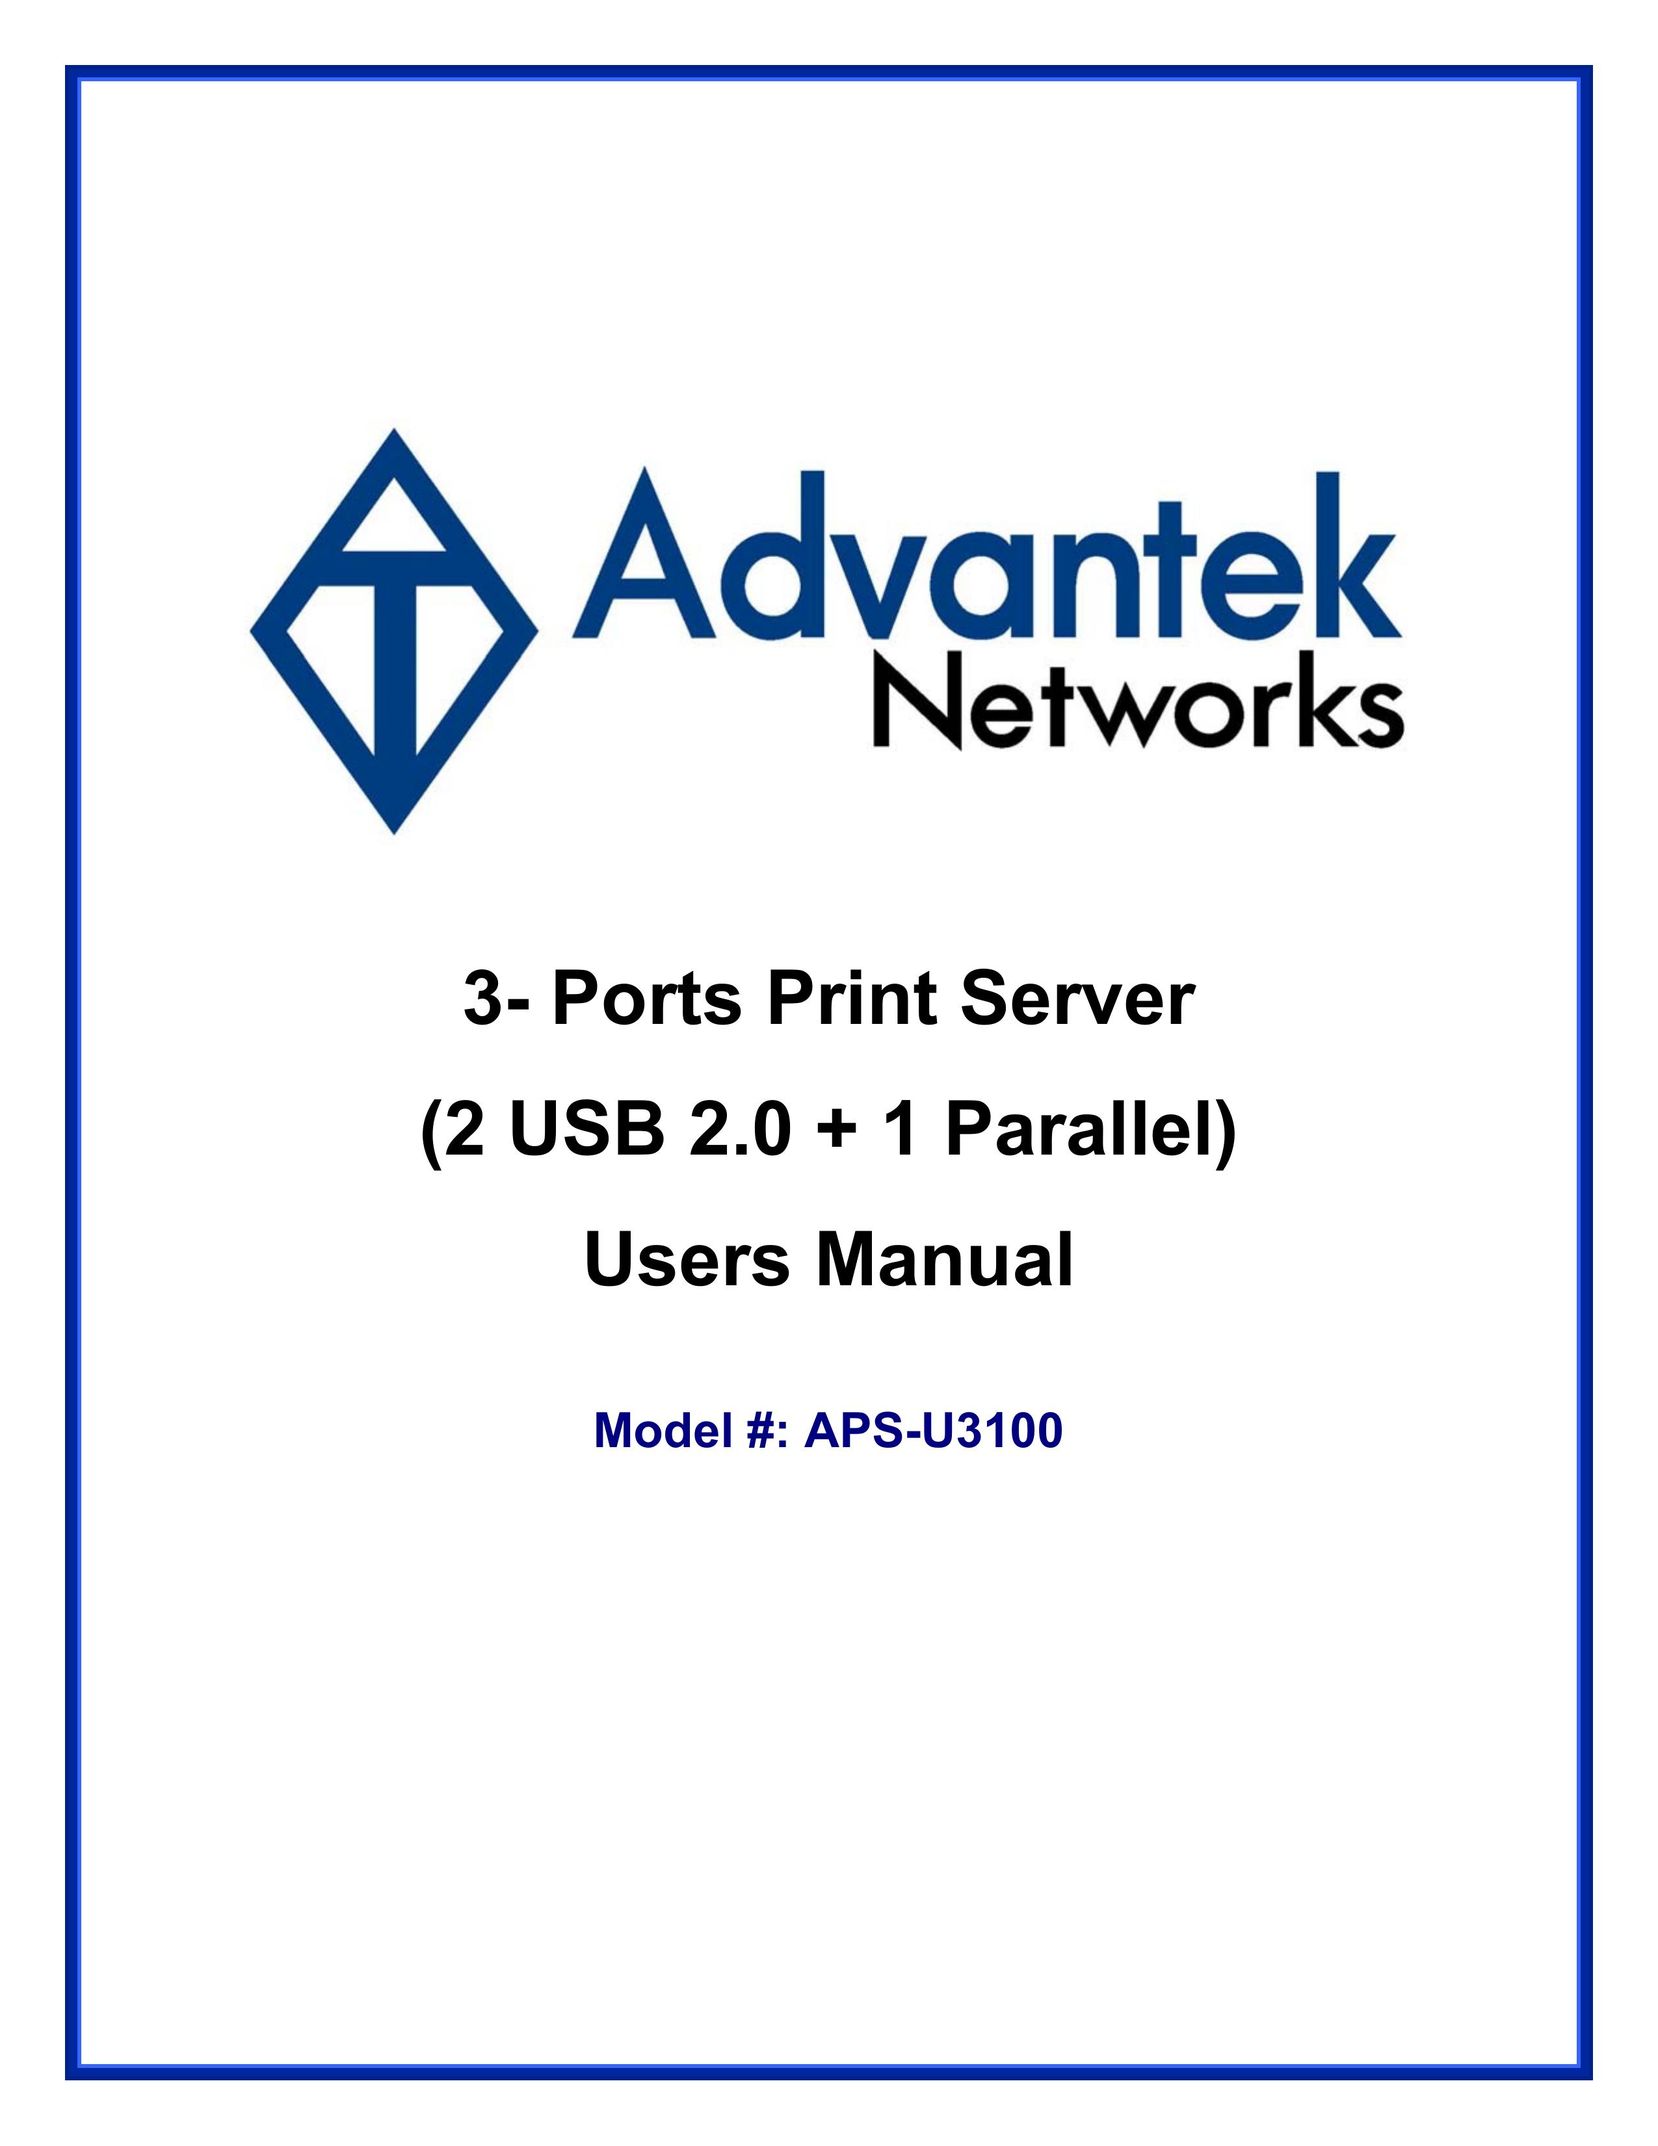 Advantek Networks APS-U3100 Printer User Manual